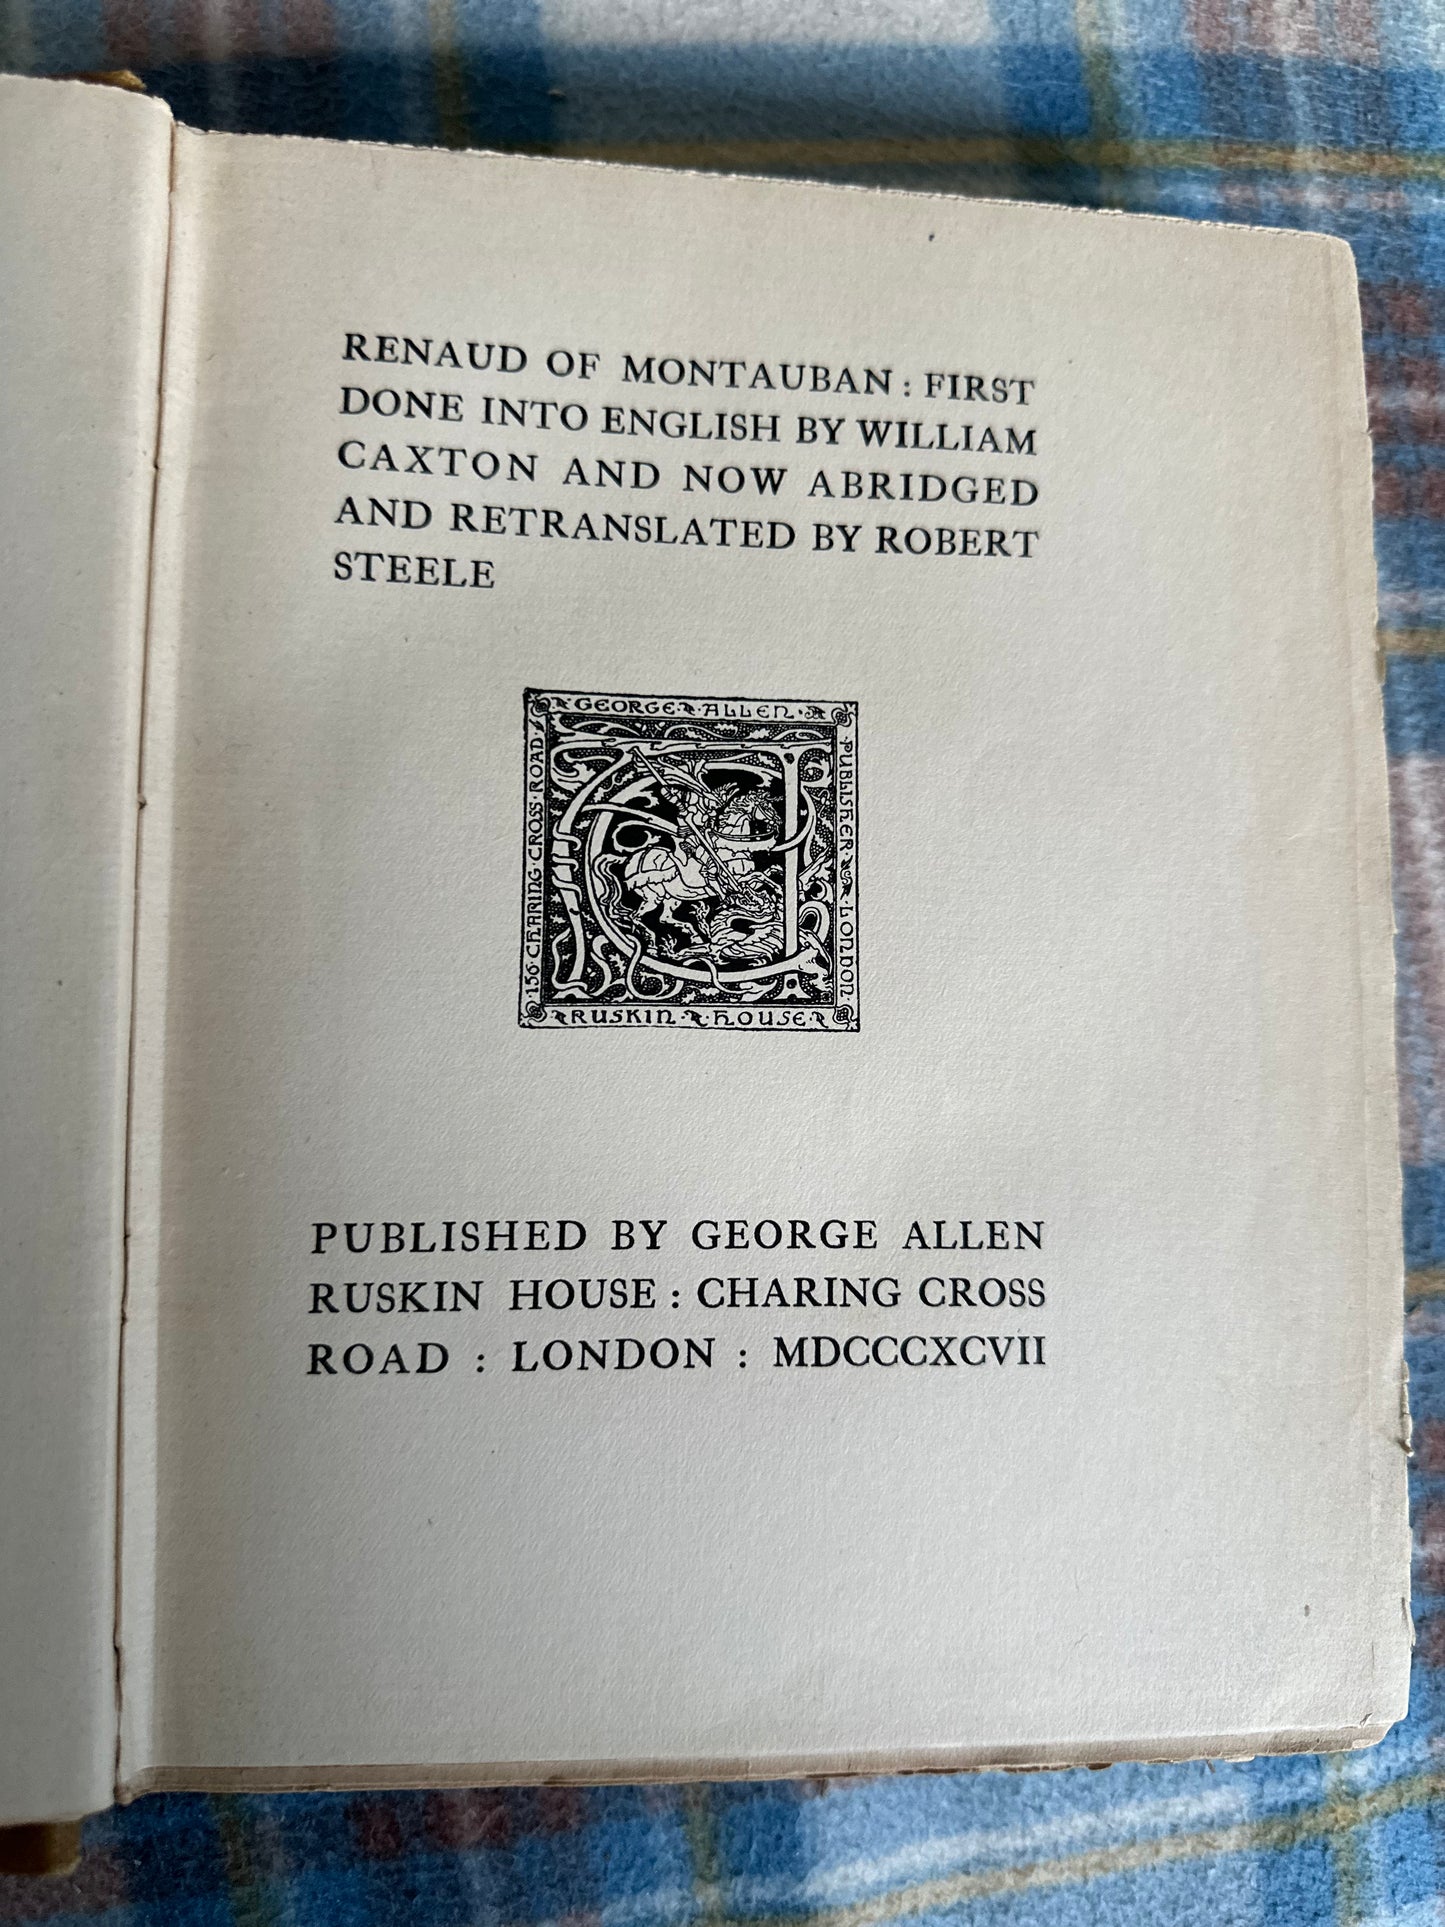 1907 Renaud Of Montauban retranslated by Robert Steele(George Allen Publisher